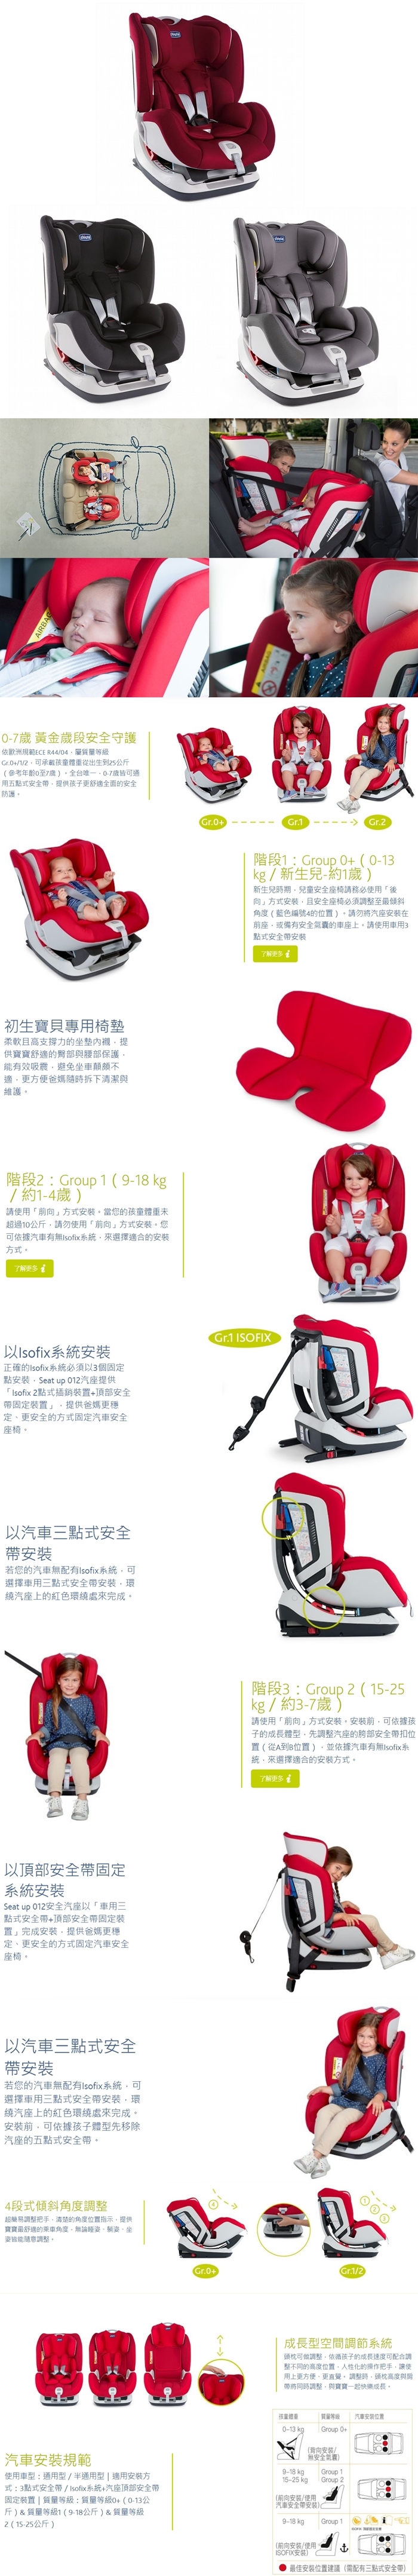 CHICCO-Seat up 012 Isofix安全汽座(熱情紅/搖滾黑/大理灰)CBB79828